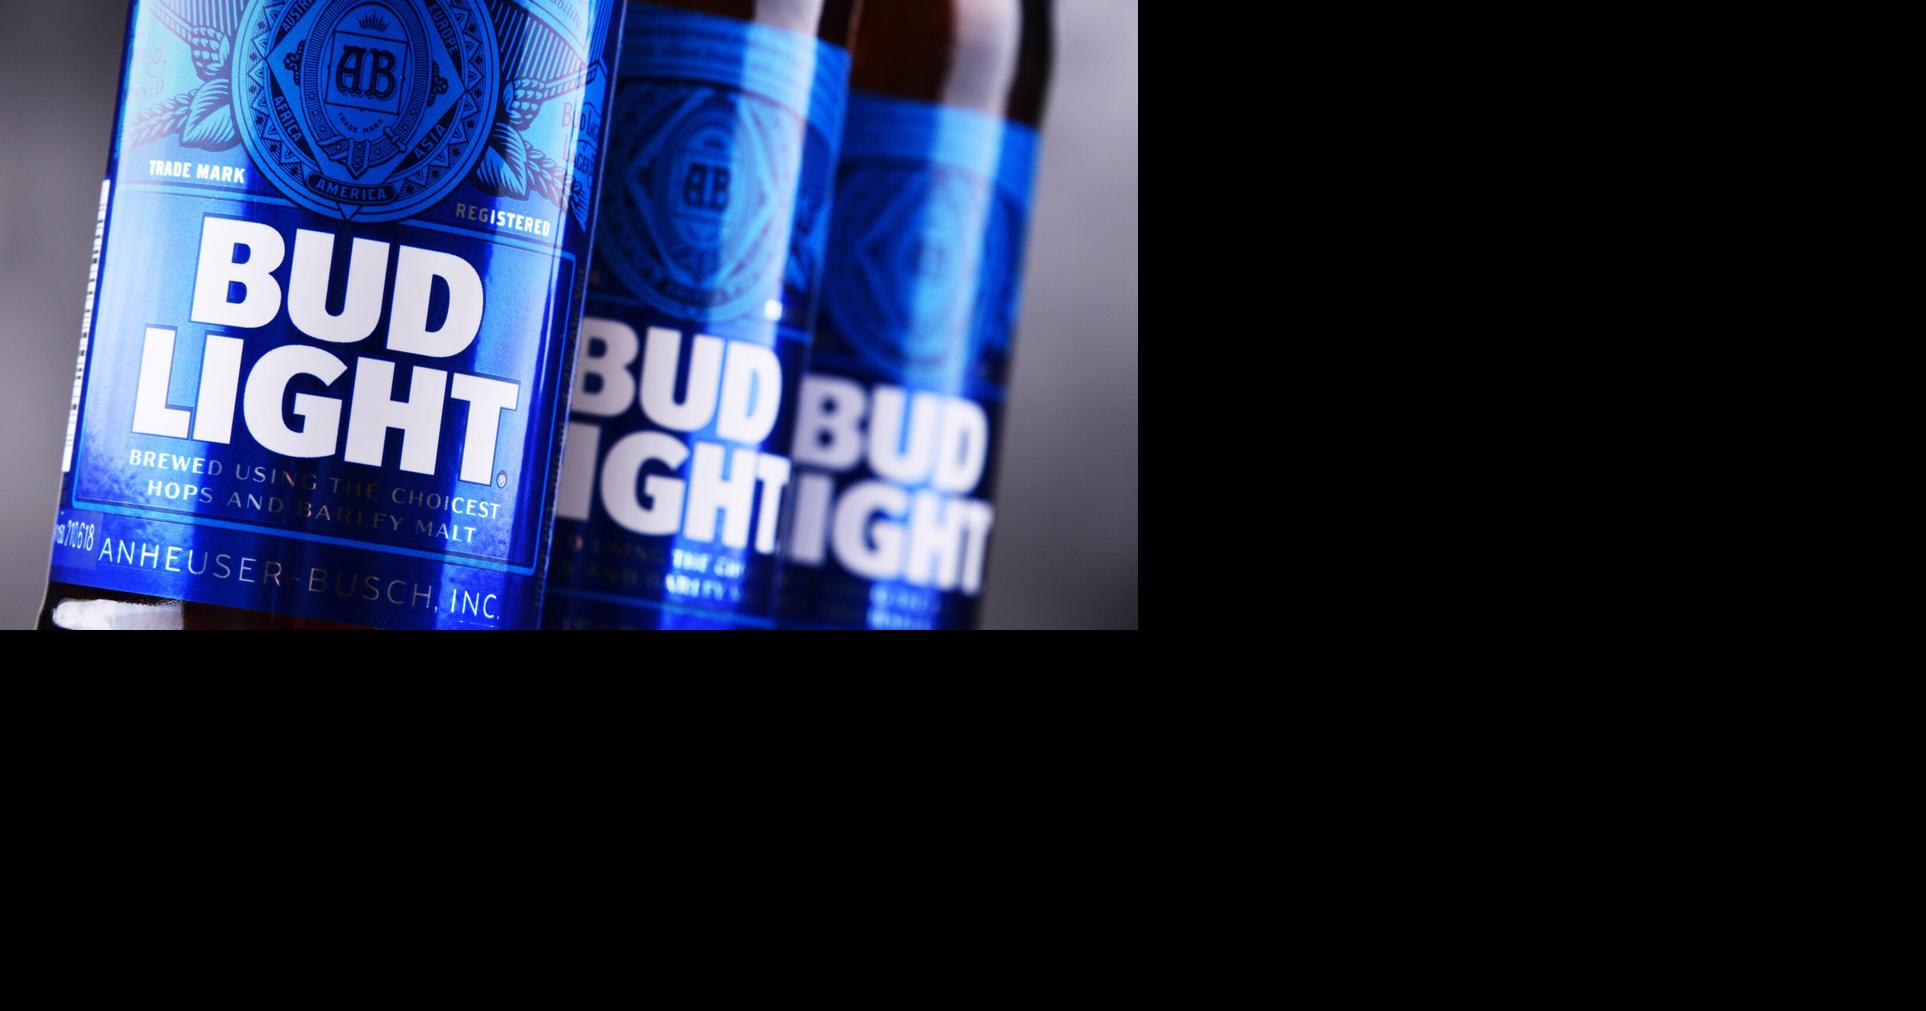 Bud Light sales dip after trans promotion, but boycotts often don